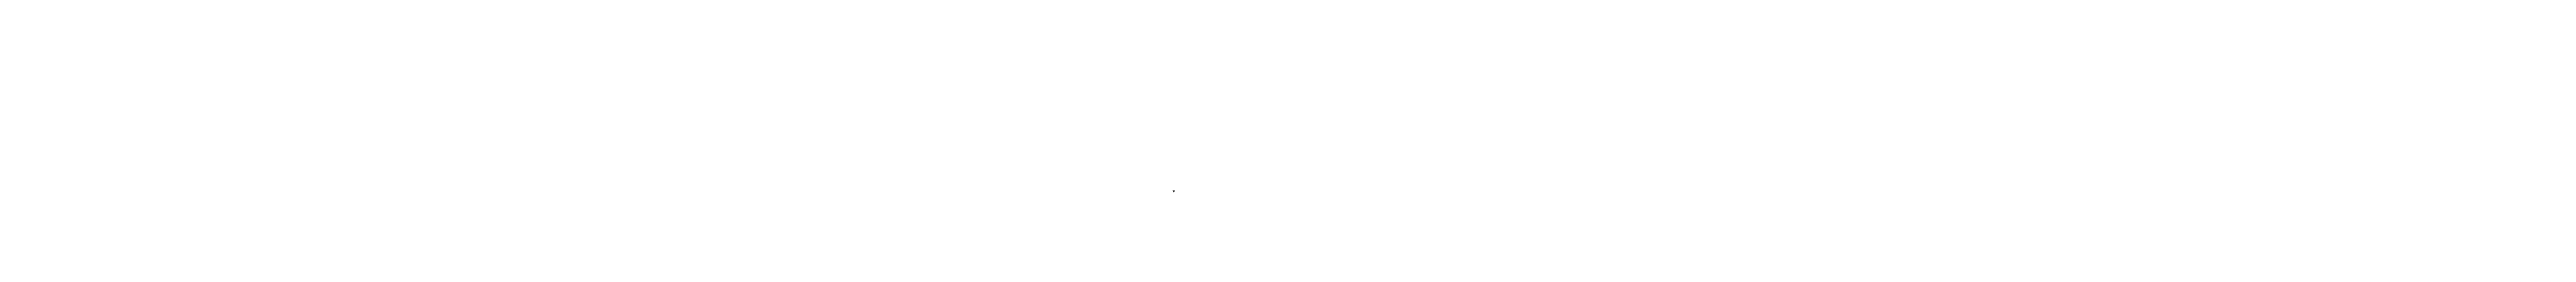 The Vamps logo copy2